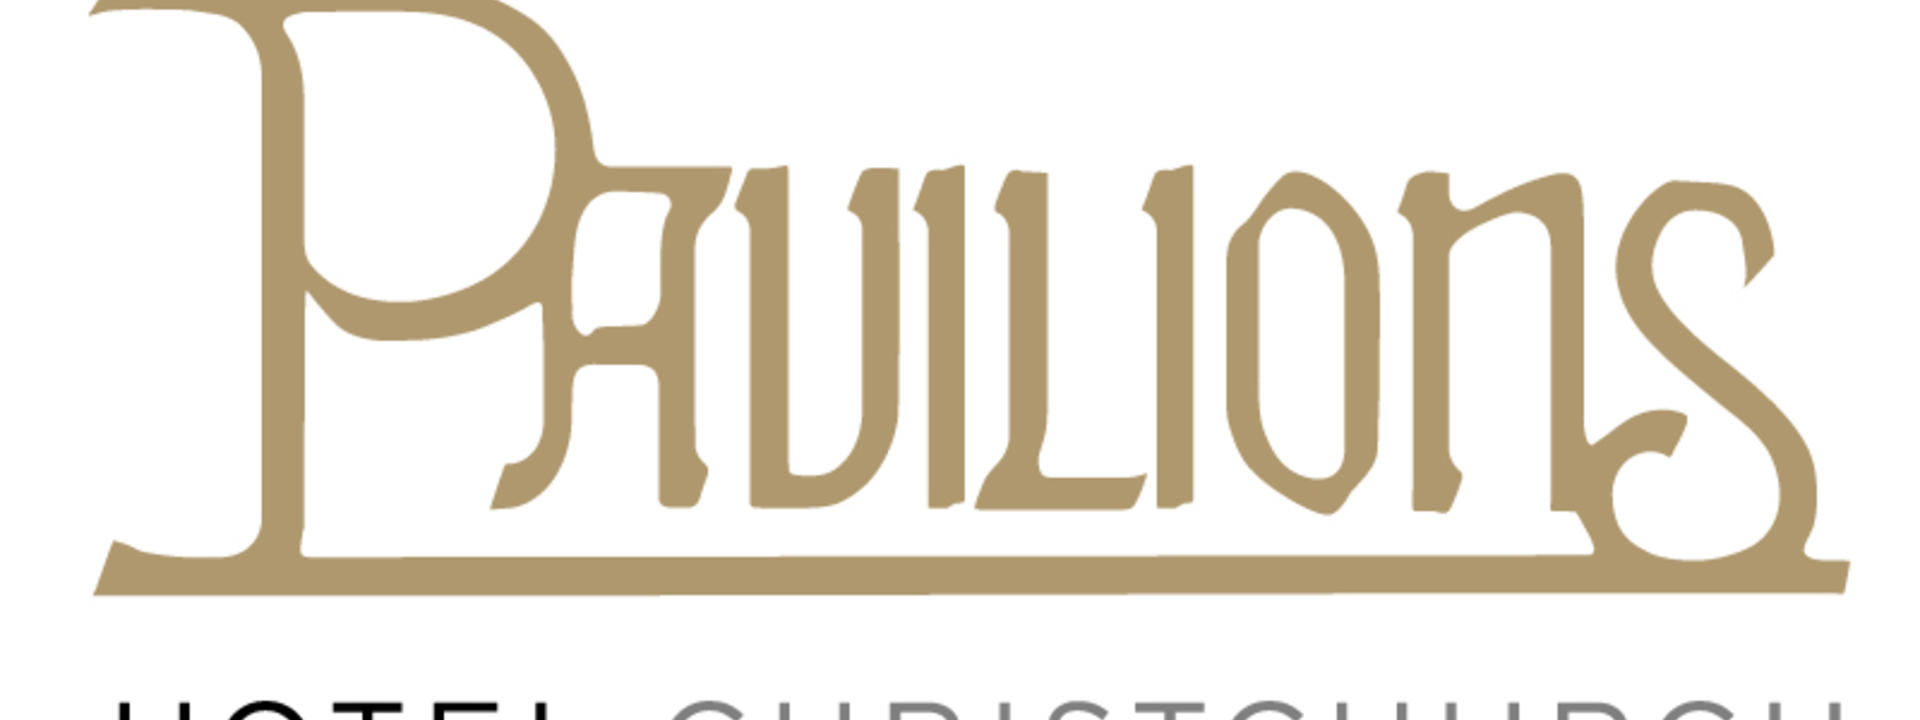 Pavilions-Hotel-logo-100%-PURE-site.jpg